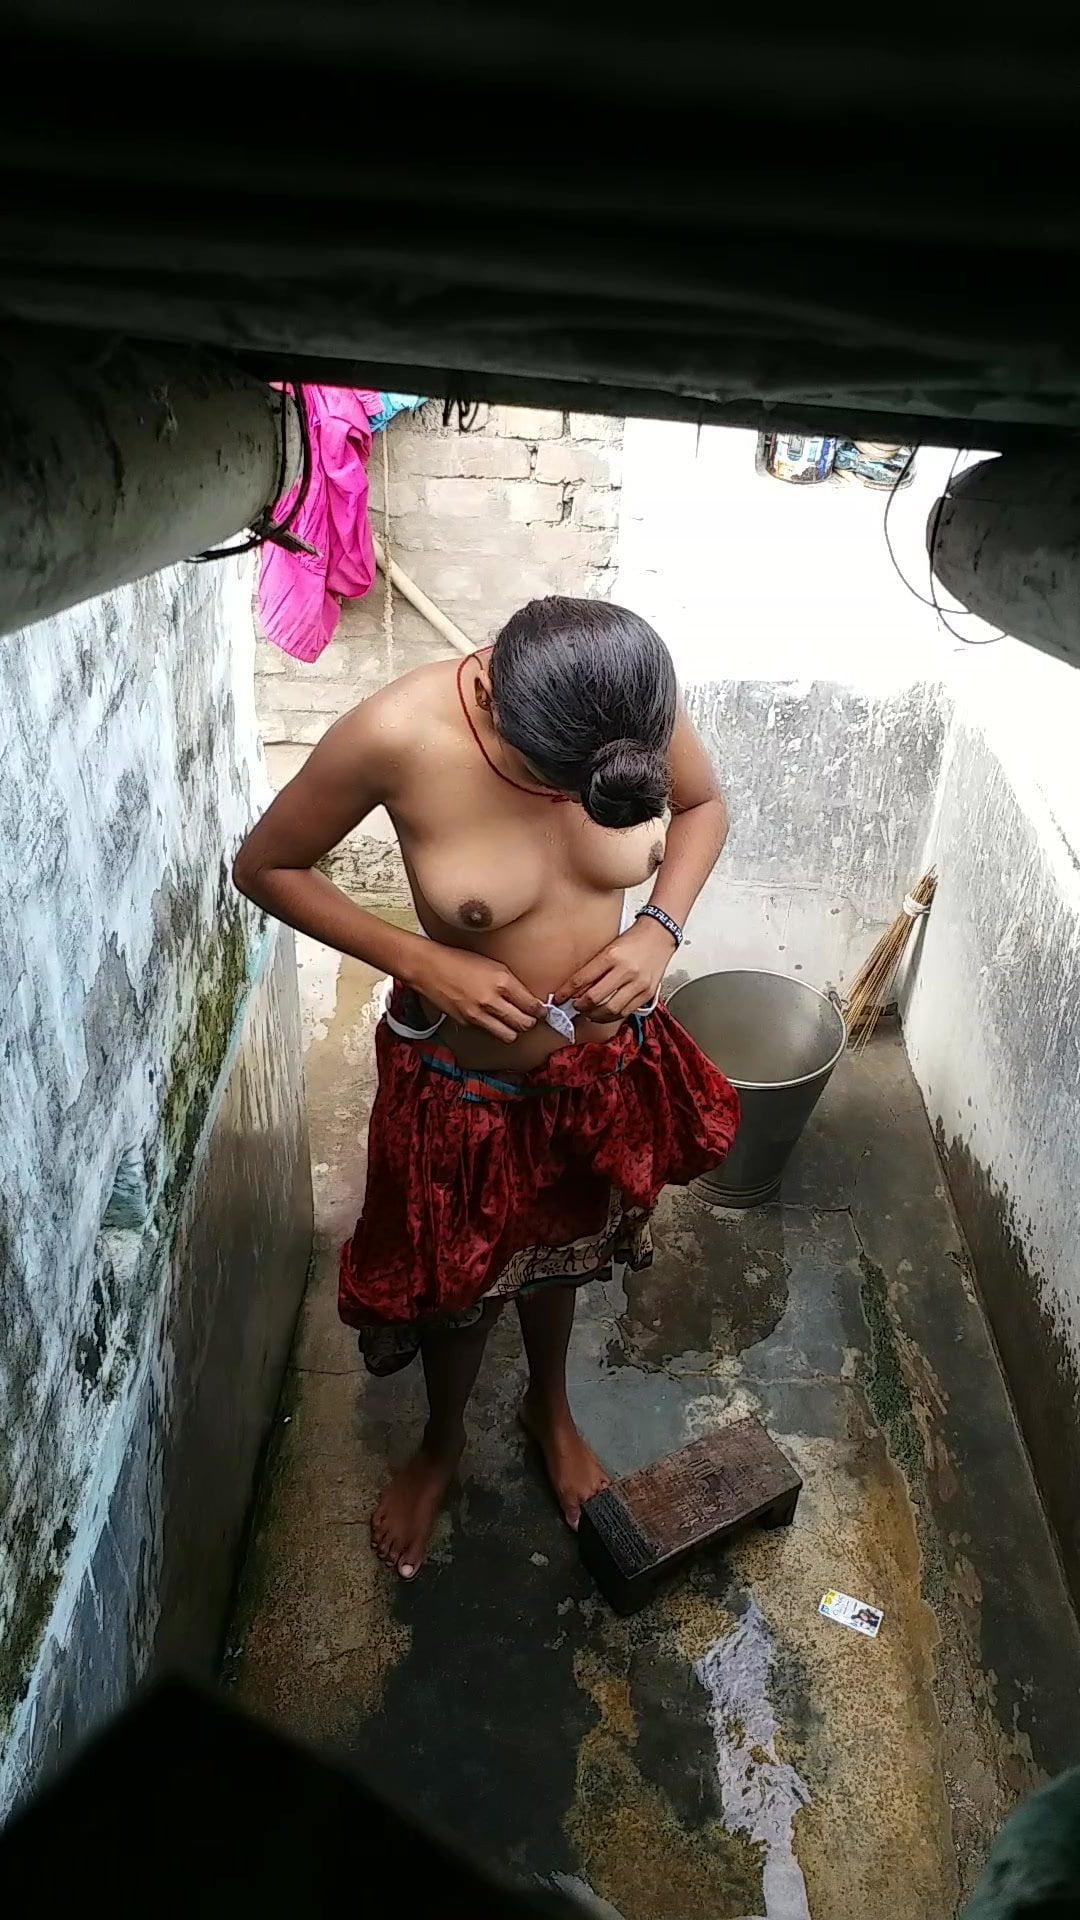 Bhaturum Me Sex - Saali Ki Chudai Bathroom Me, Free Indian Porn cc: xHamster